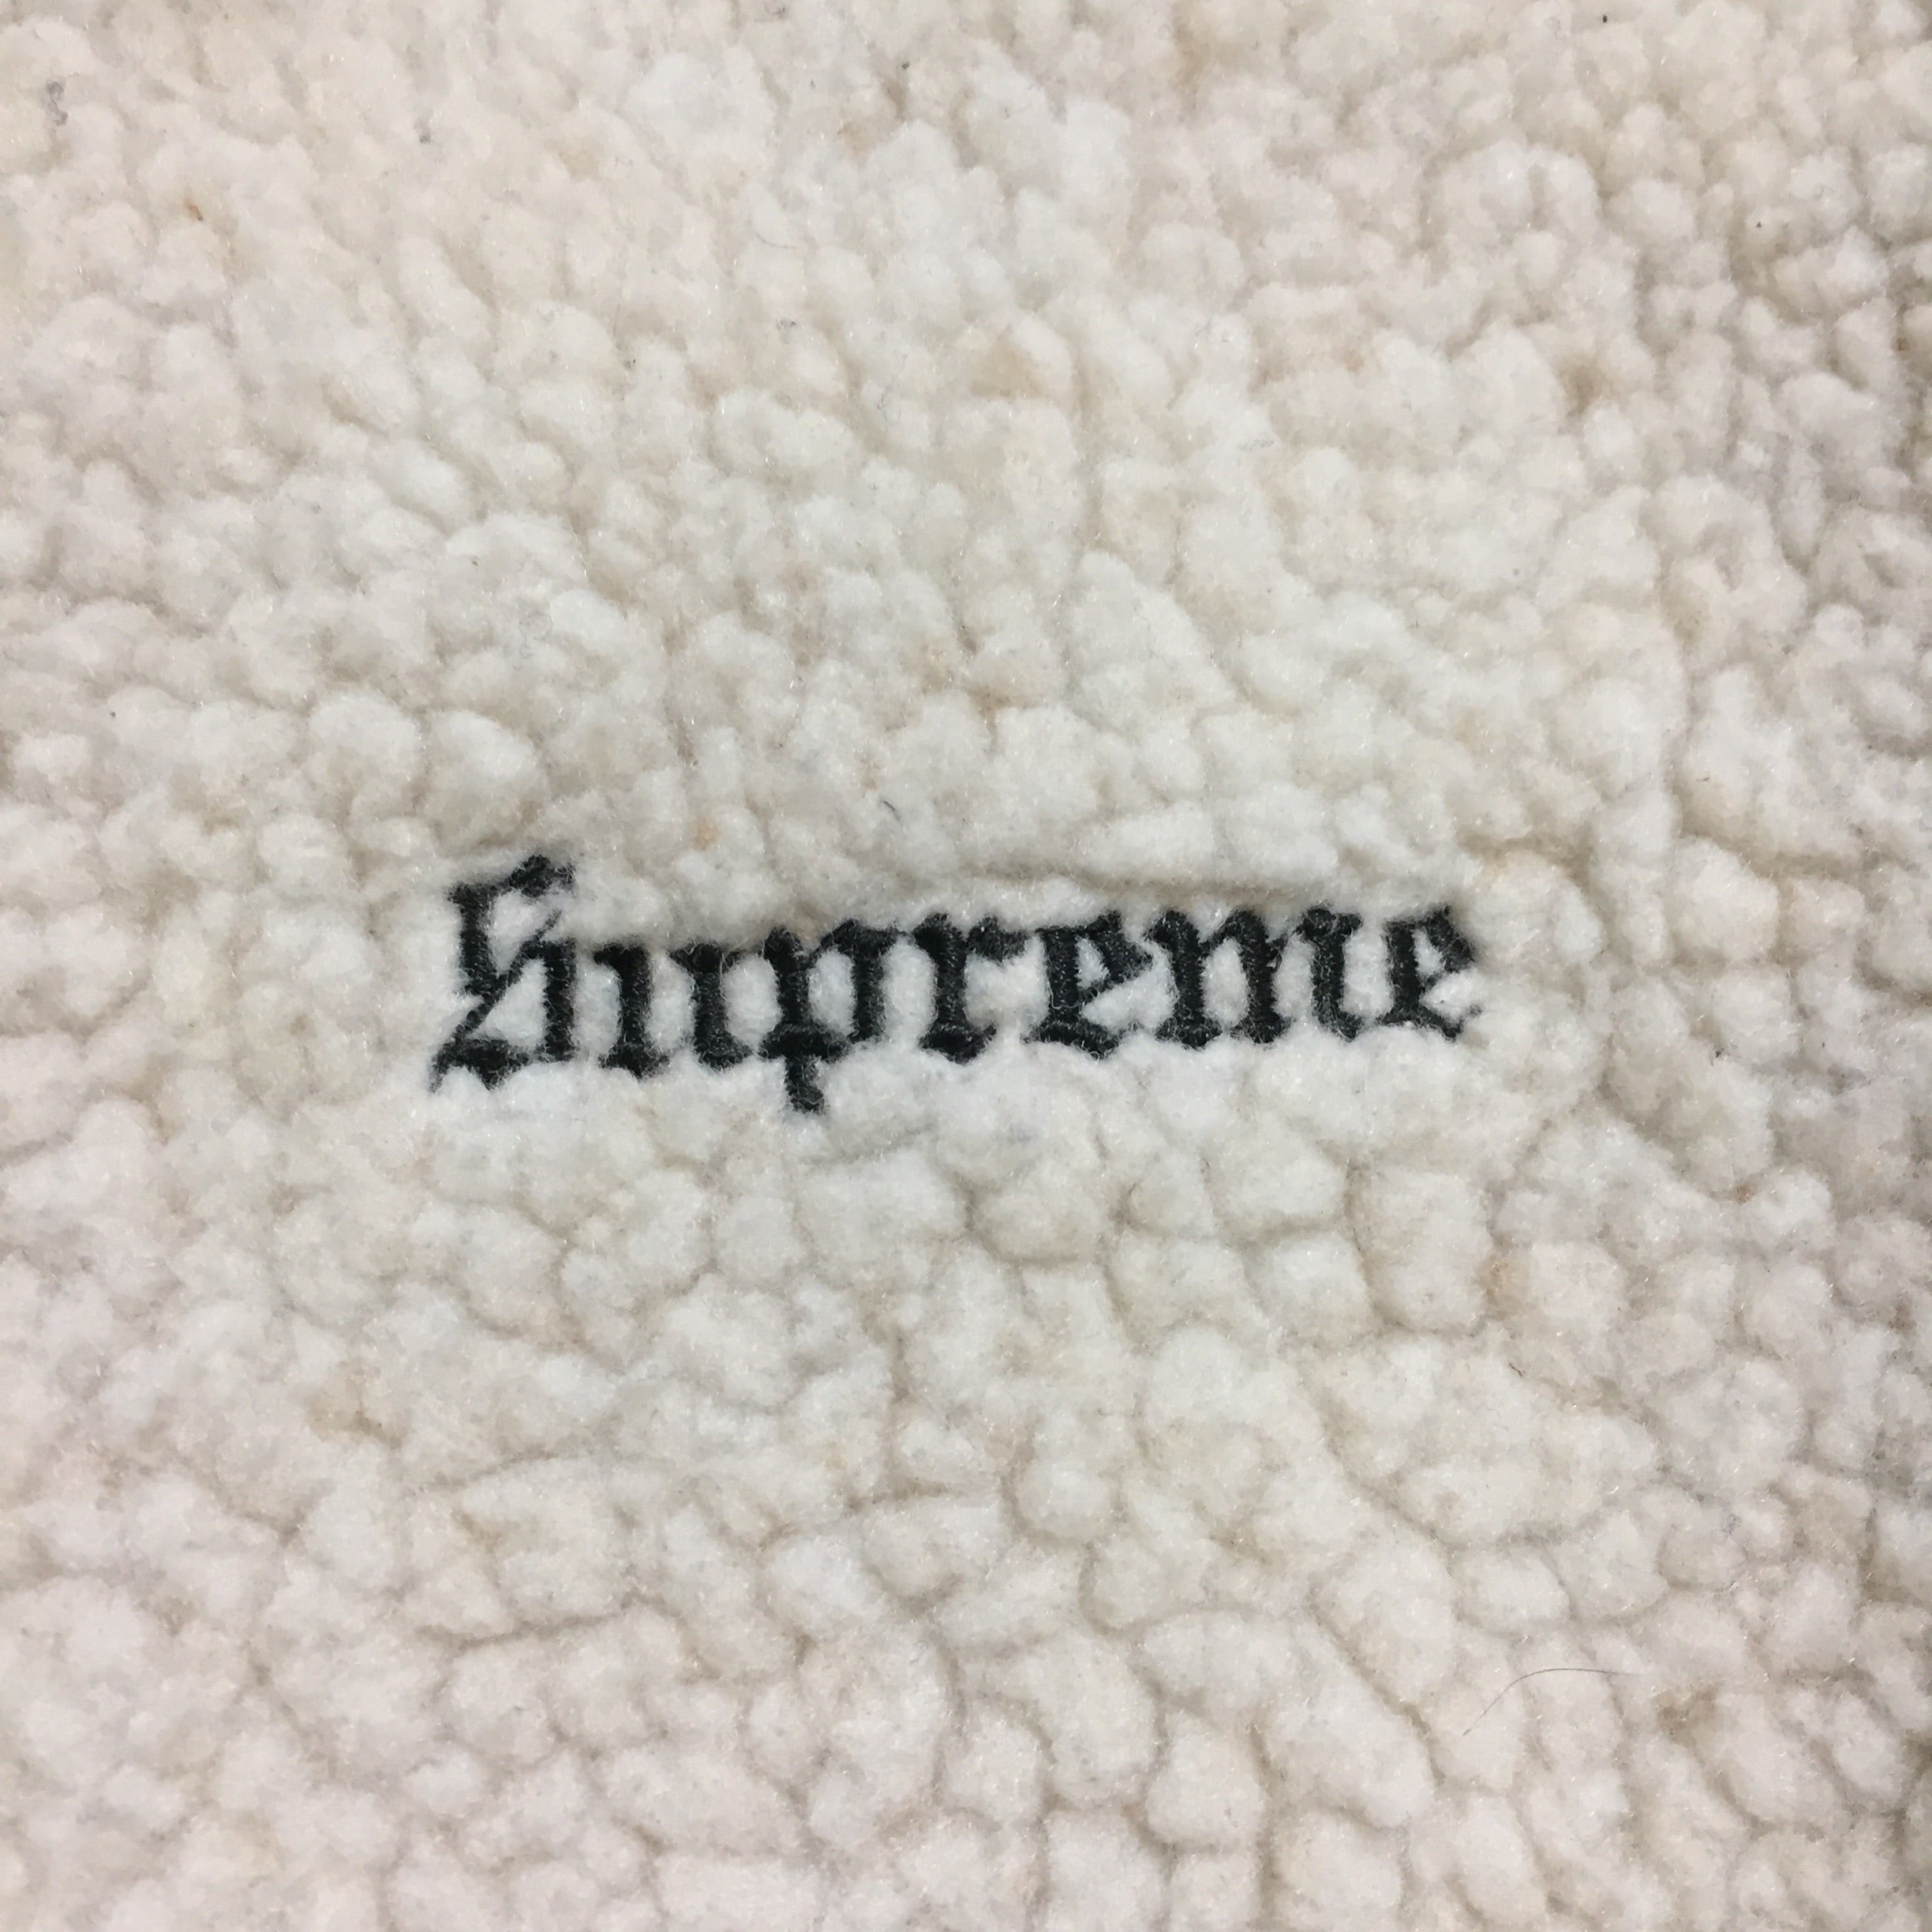 2016 Supreme Reversible Wool Logo Vest